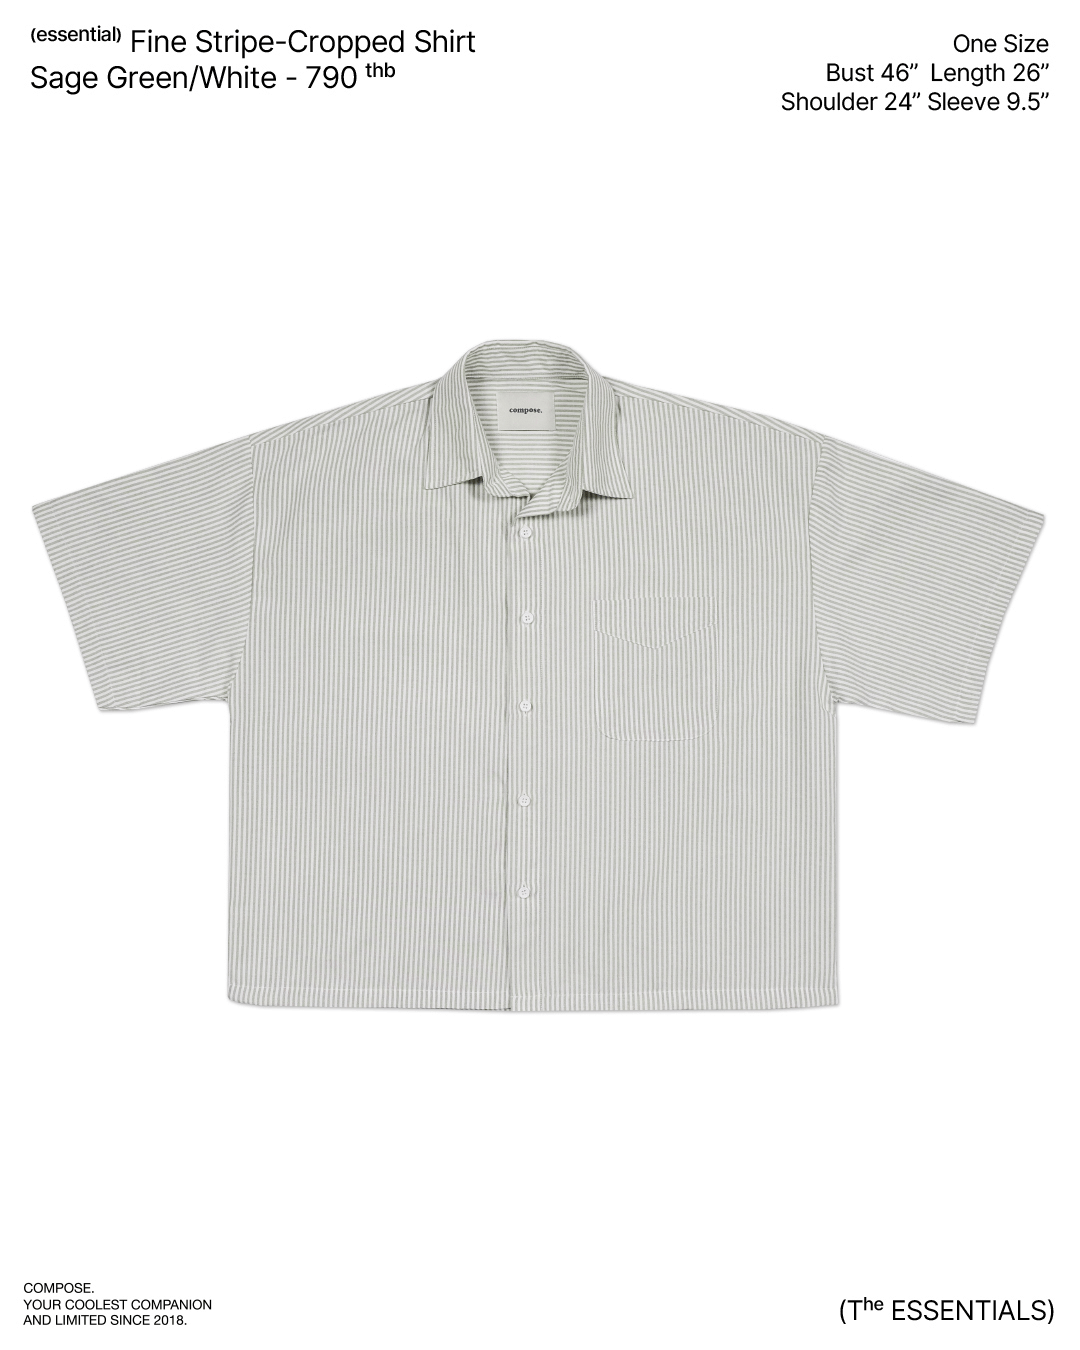 Fine Stripe-Cropped Shirt in Sage Green/White